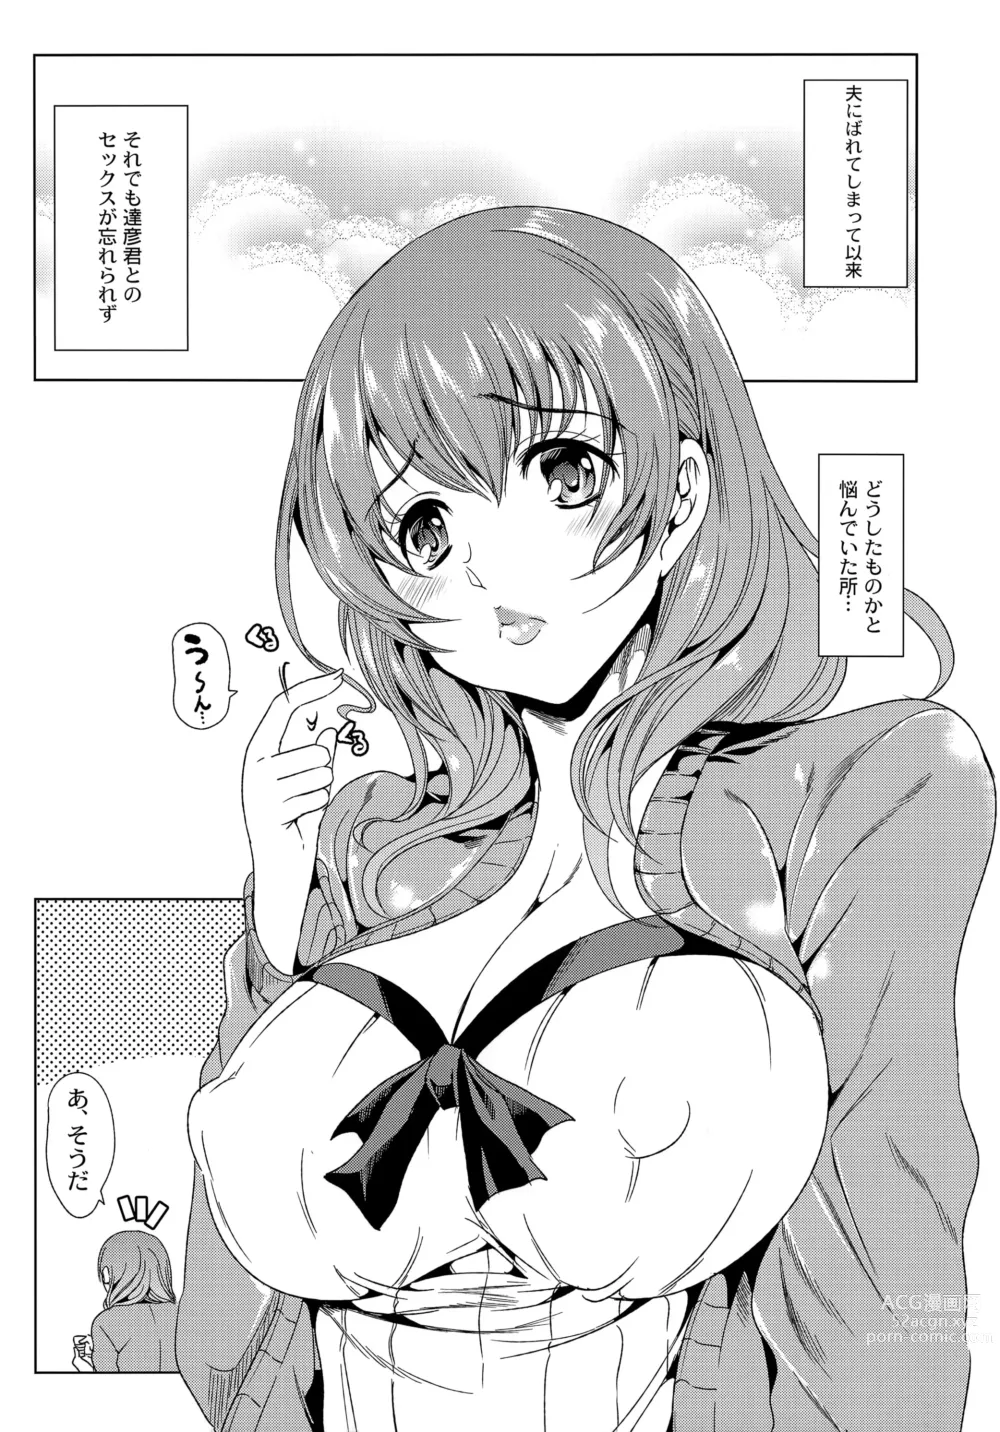 Page 1 of manga Kimochiii Ana Toranoana Kounyu Tokuten 4P Leaflet